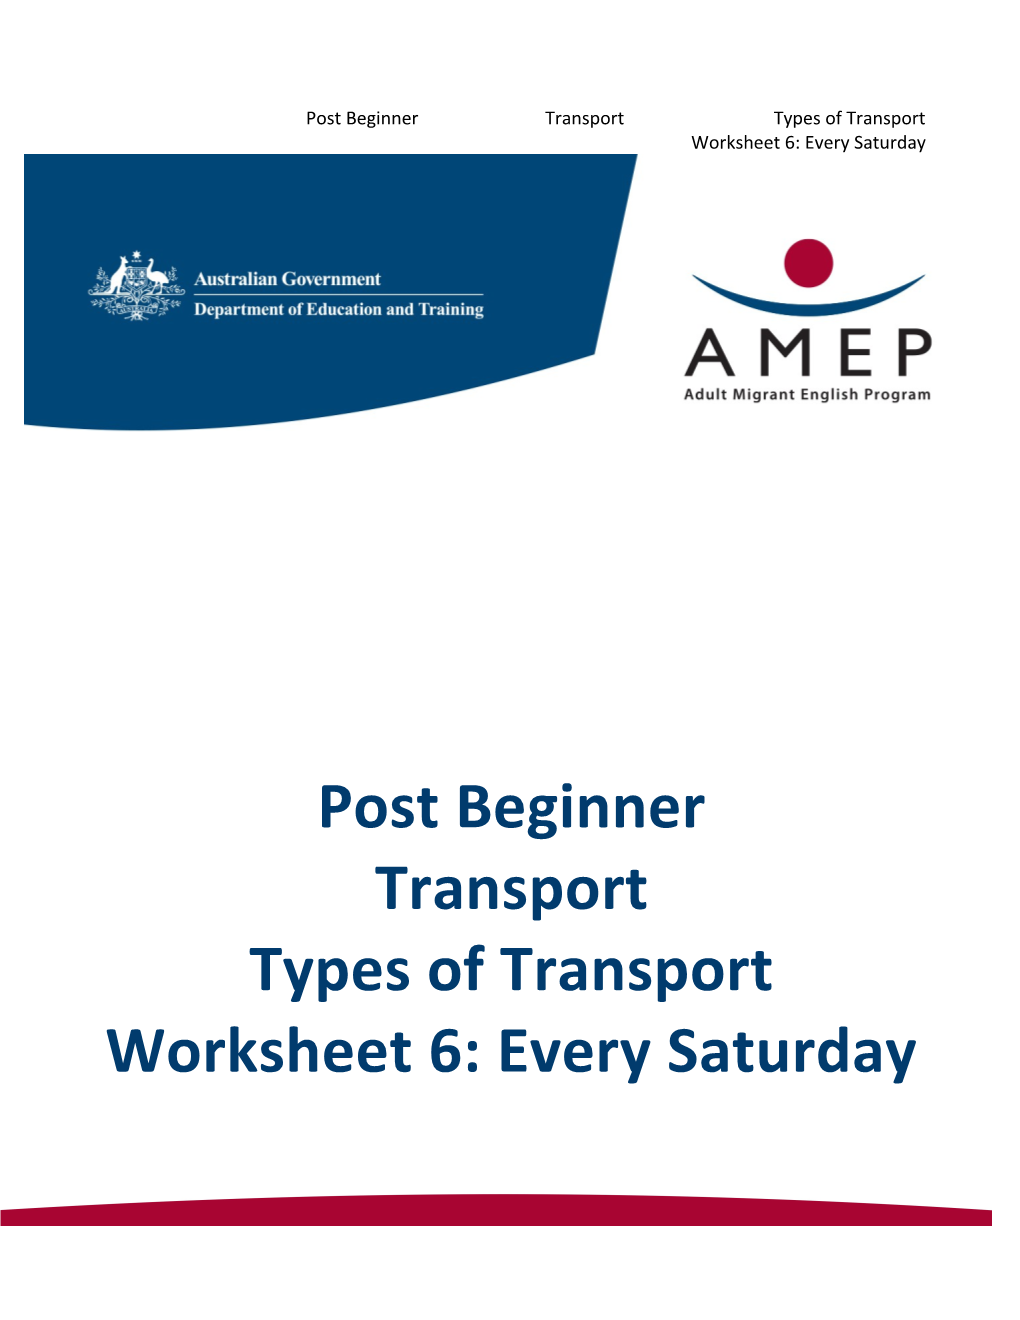 Post Beginner Transport Types of Transport Worksheet 6: Every Saturday